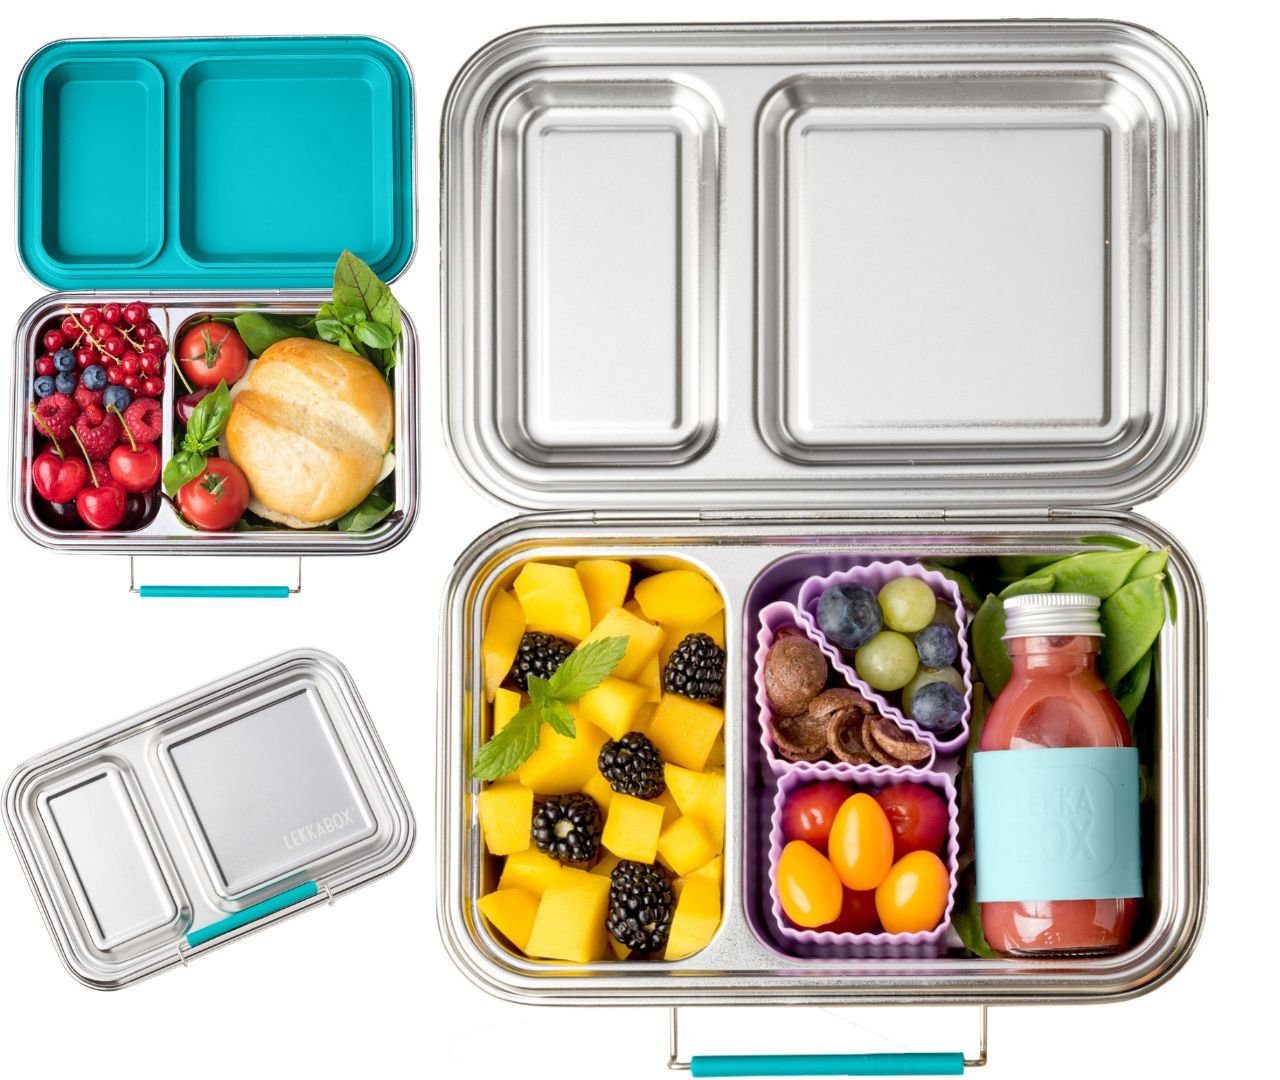 LEKKABOX Lunchbox DUO Edelstahl Brotdose, 2 Fächer - Kinder Bento Box Lunchbox, 2 auslaufsichere Fächer dank der herausnehmbaren Silikondichtung